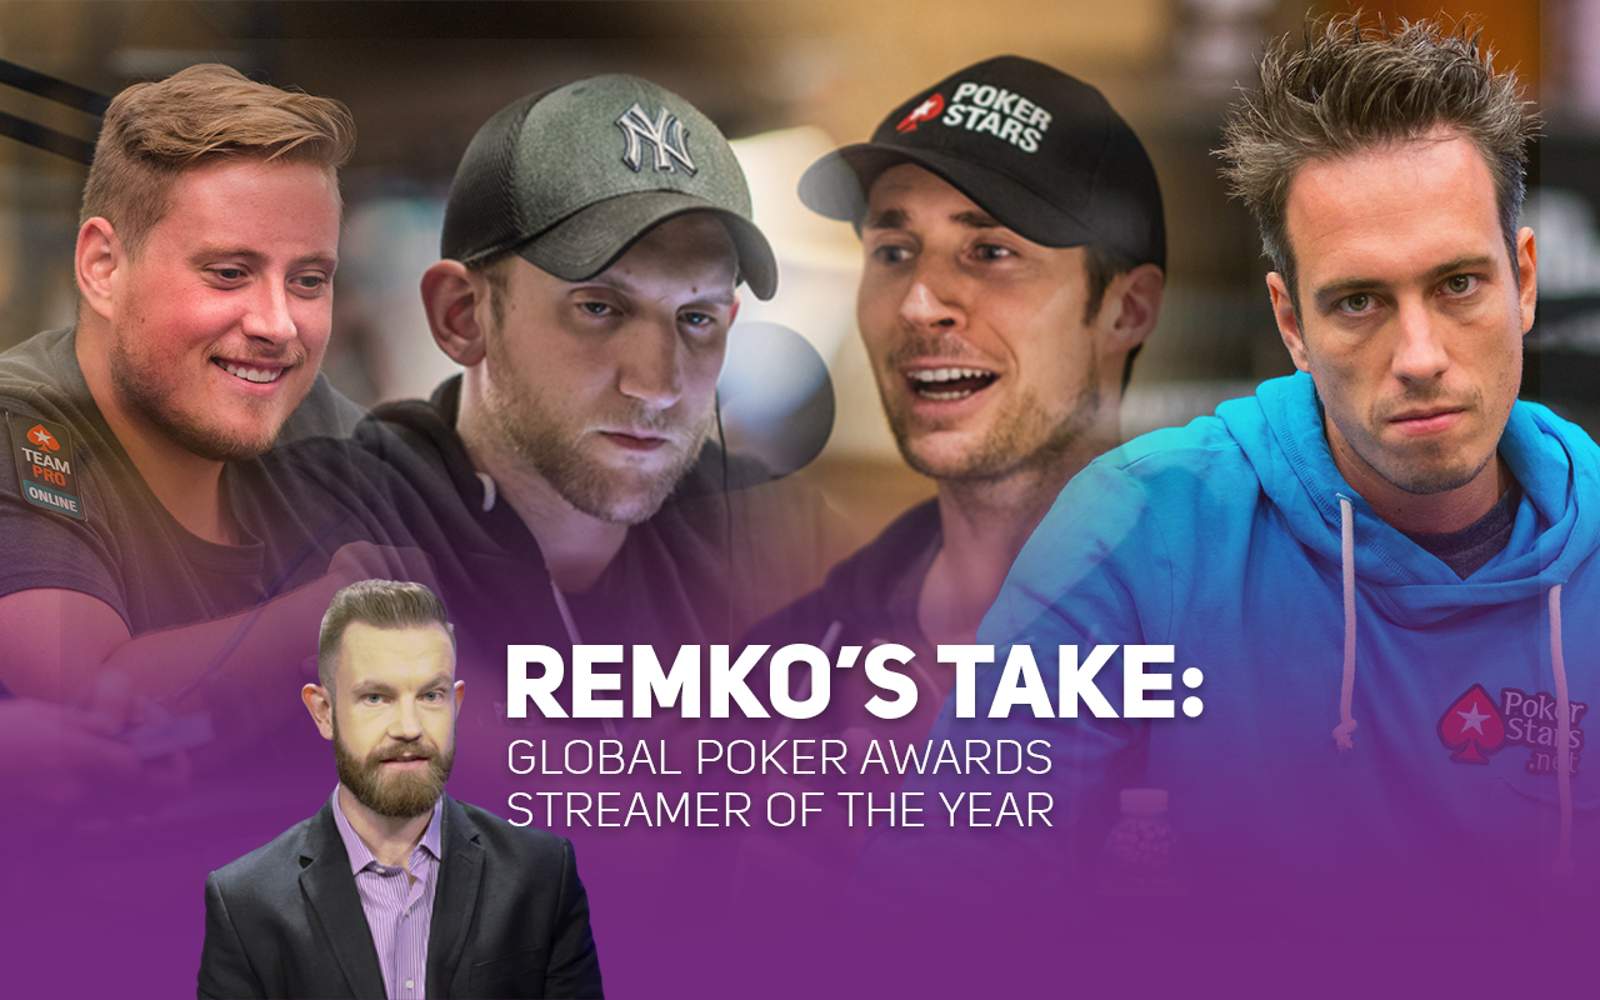 Remko's Take: Global Poker Awards Streamer of the Year